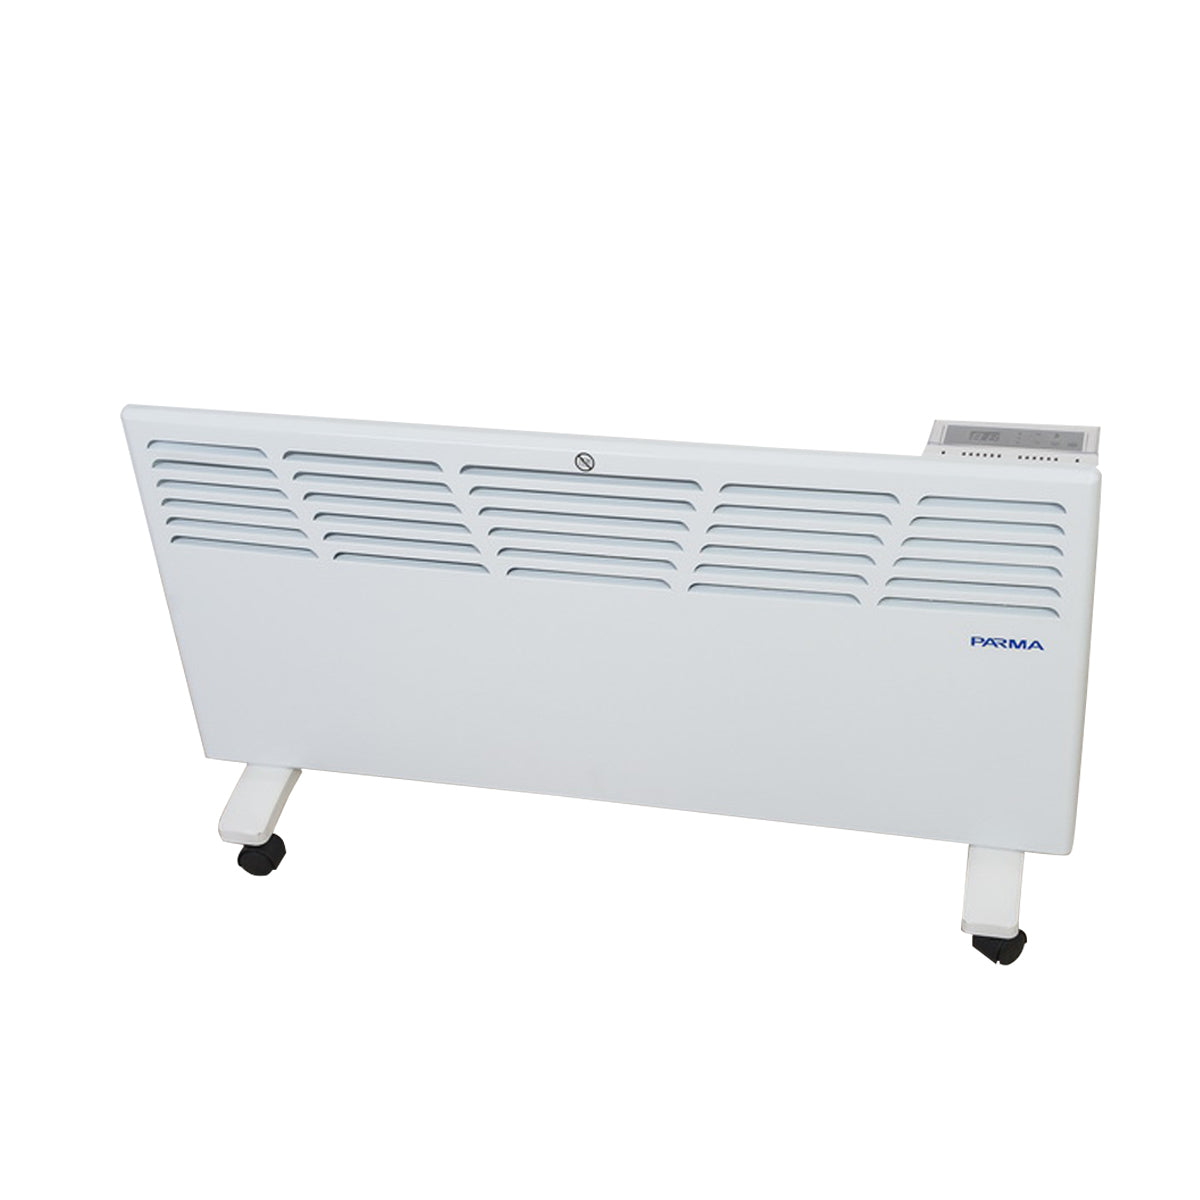 Parma NDFL1202-4E Panel Convector Heater 2000W White